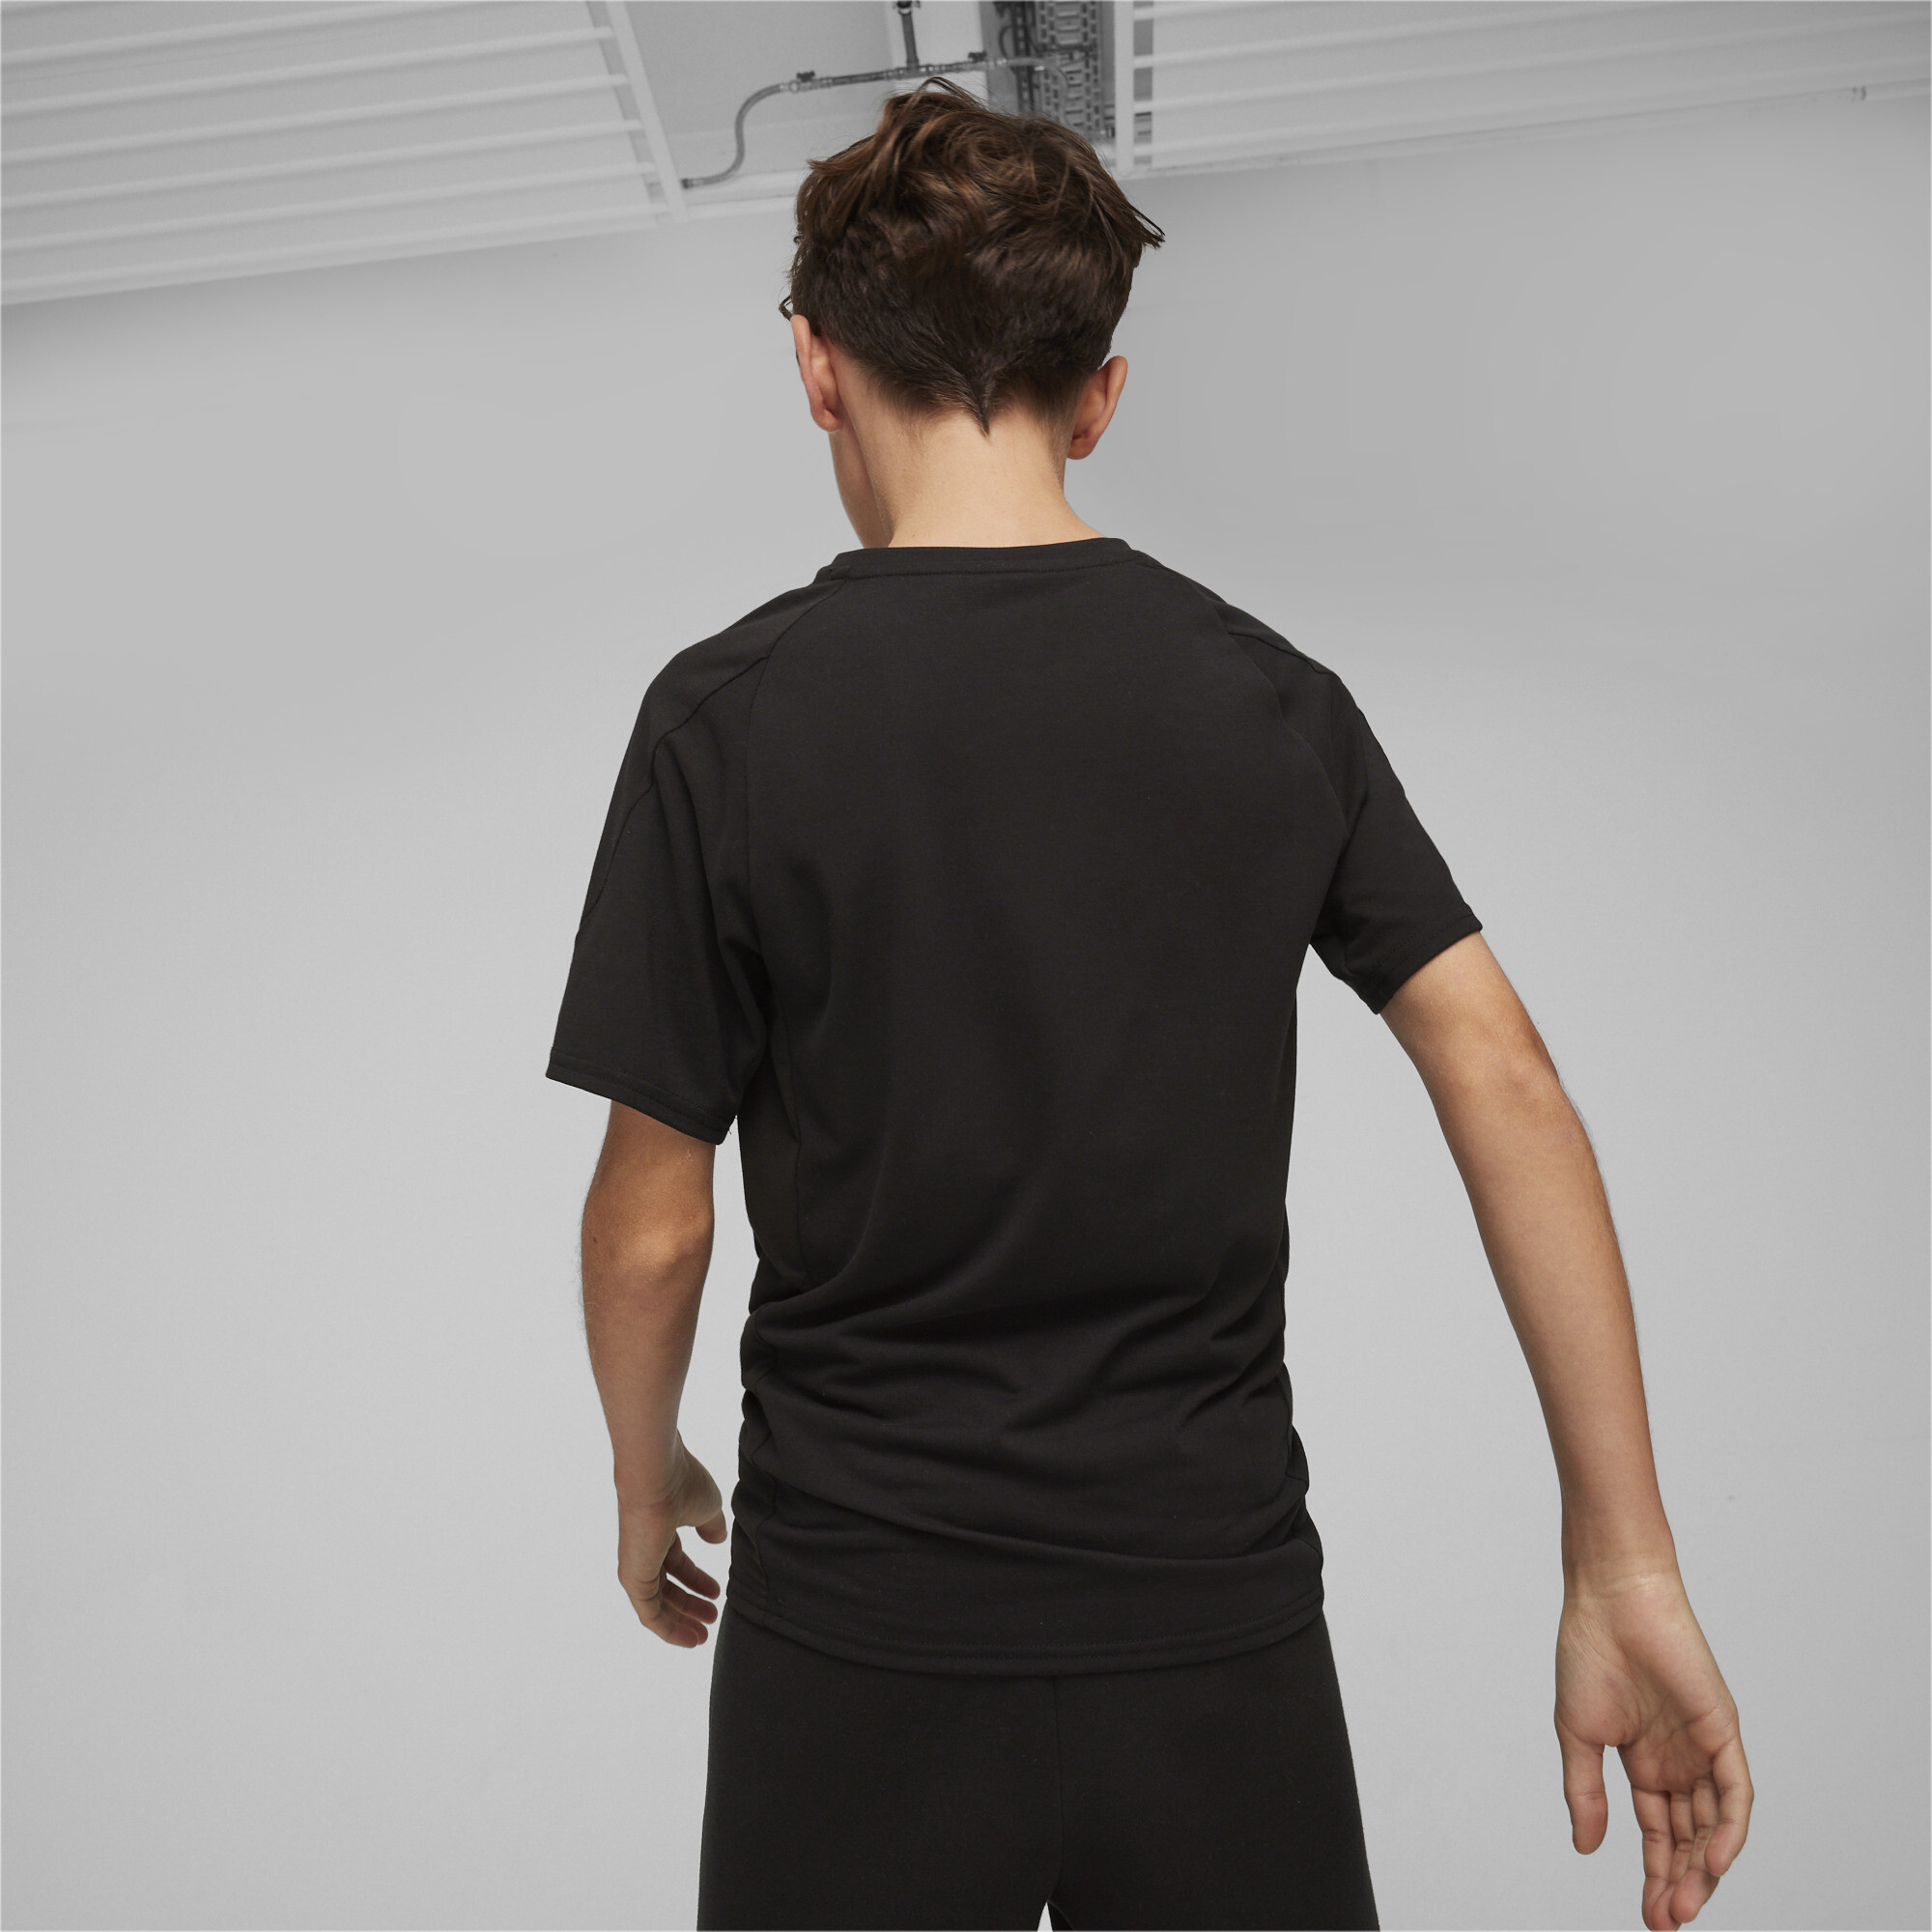 PUMA EVOSTRIPE T-Shirt In Black, Size 5-6 Youth